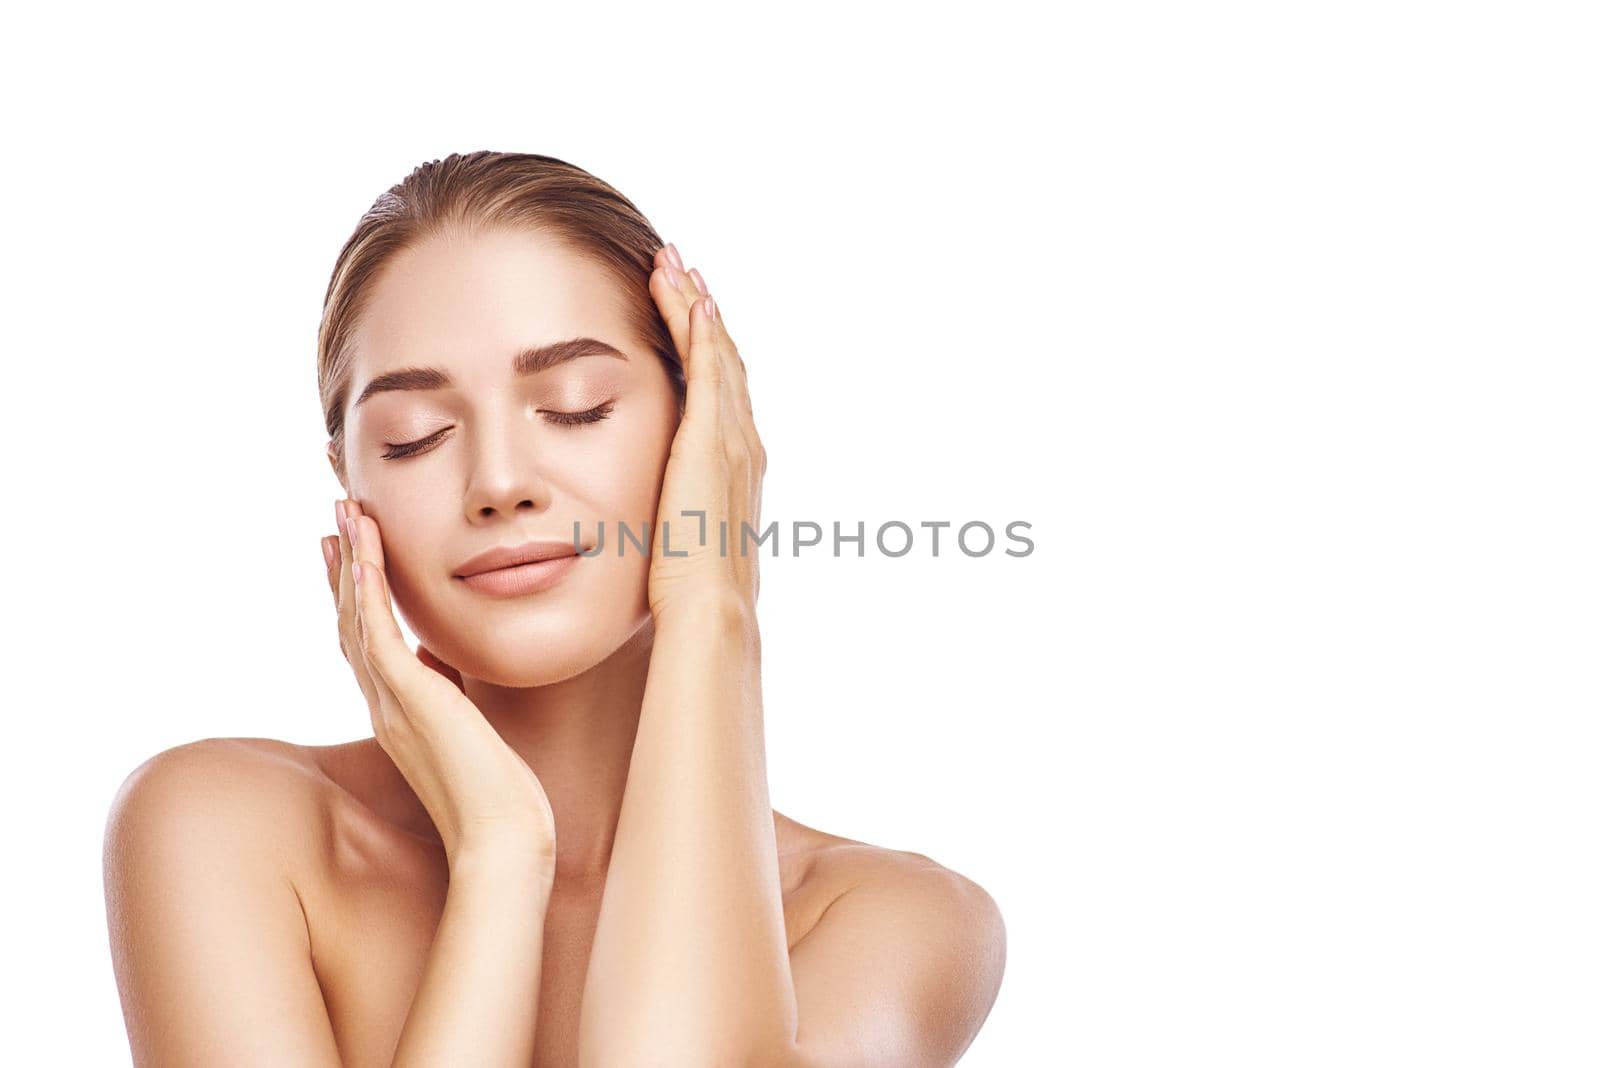 Beautiful woman face close up studio photo on white background. Light hair, grey eyes, closed eyes